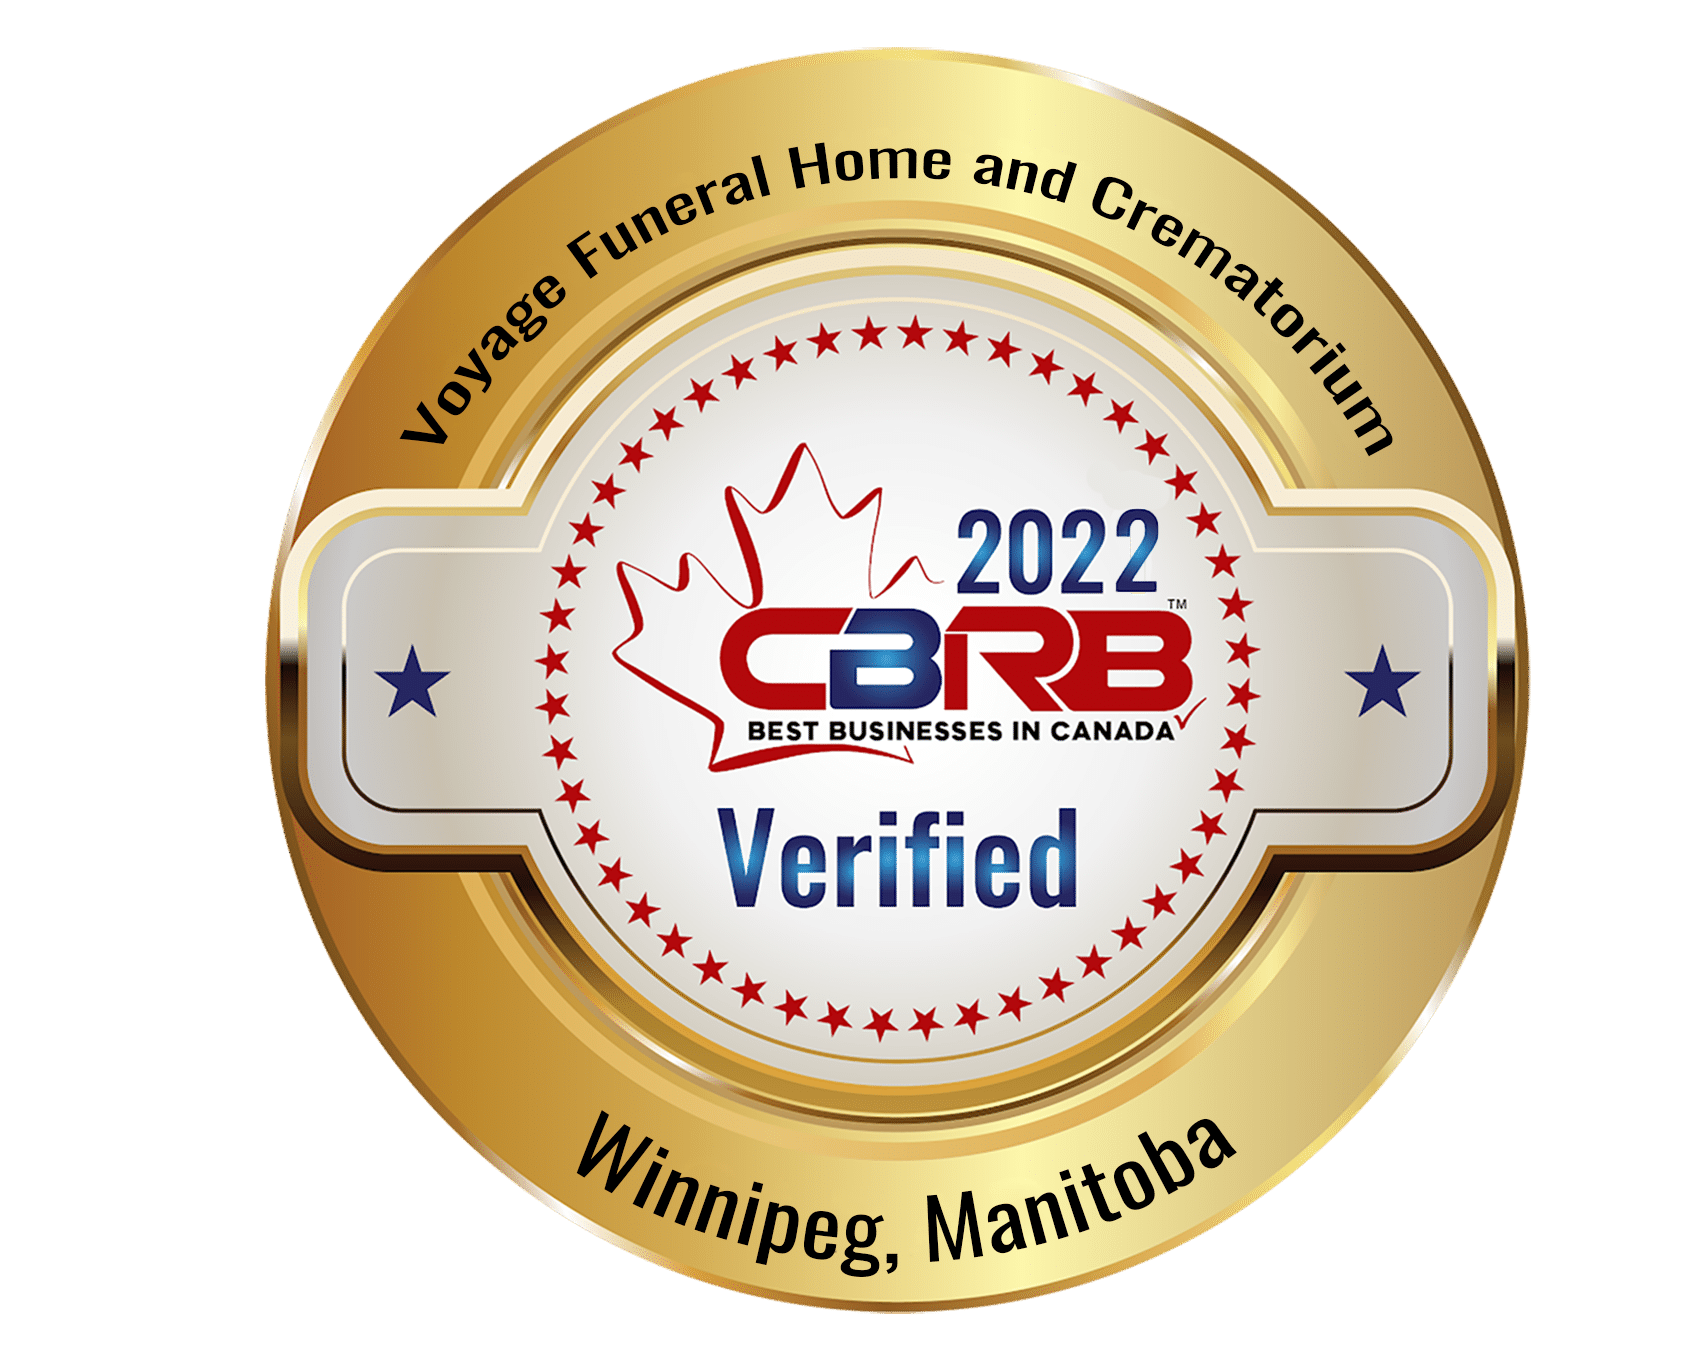 2022 CBRB Inc Voyage Funeral Home and Crematorium Badge